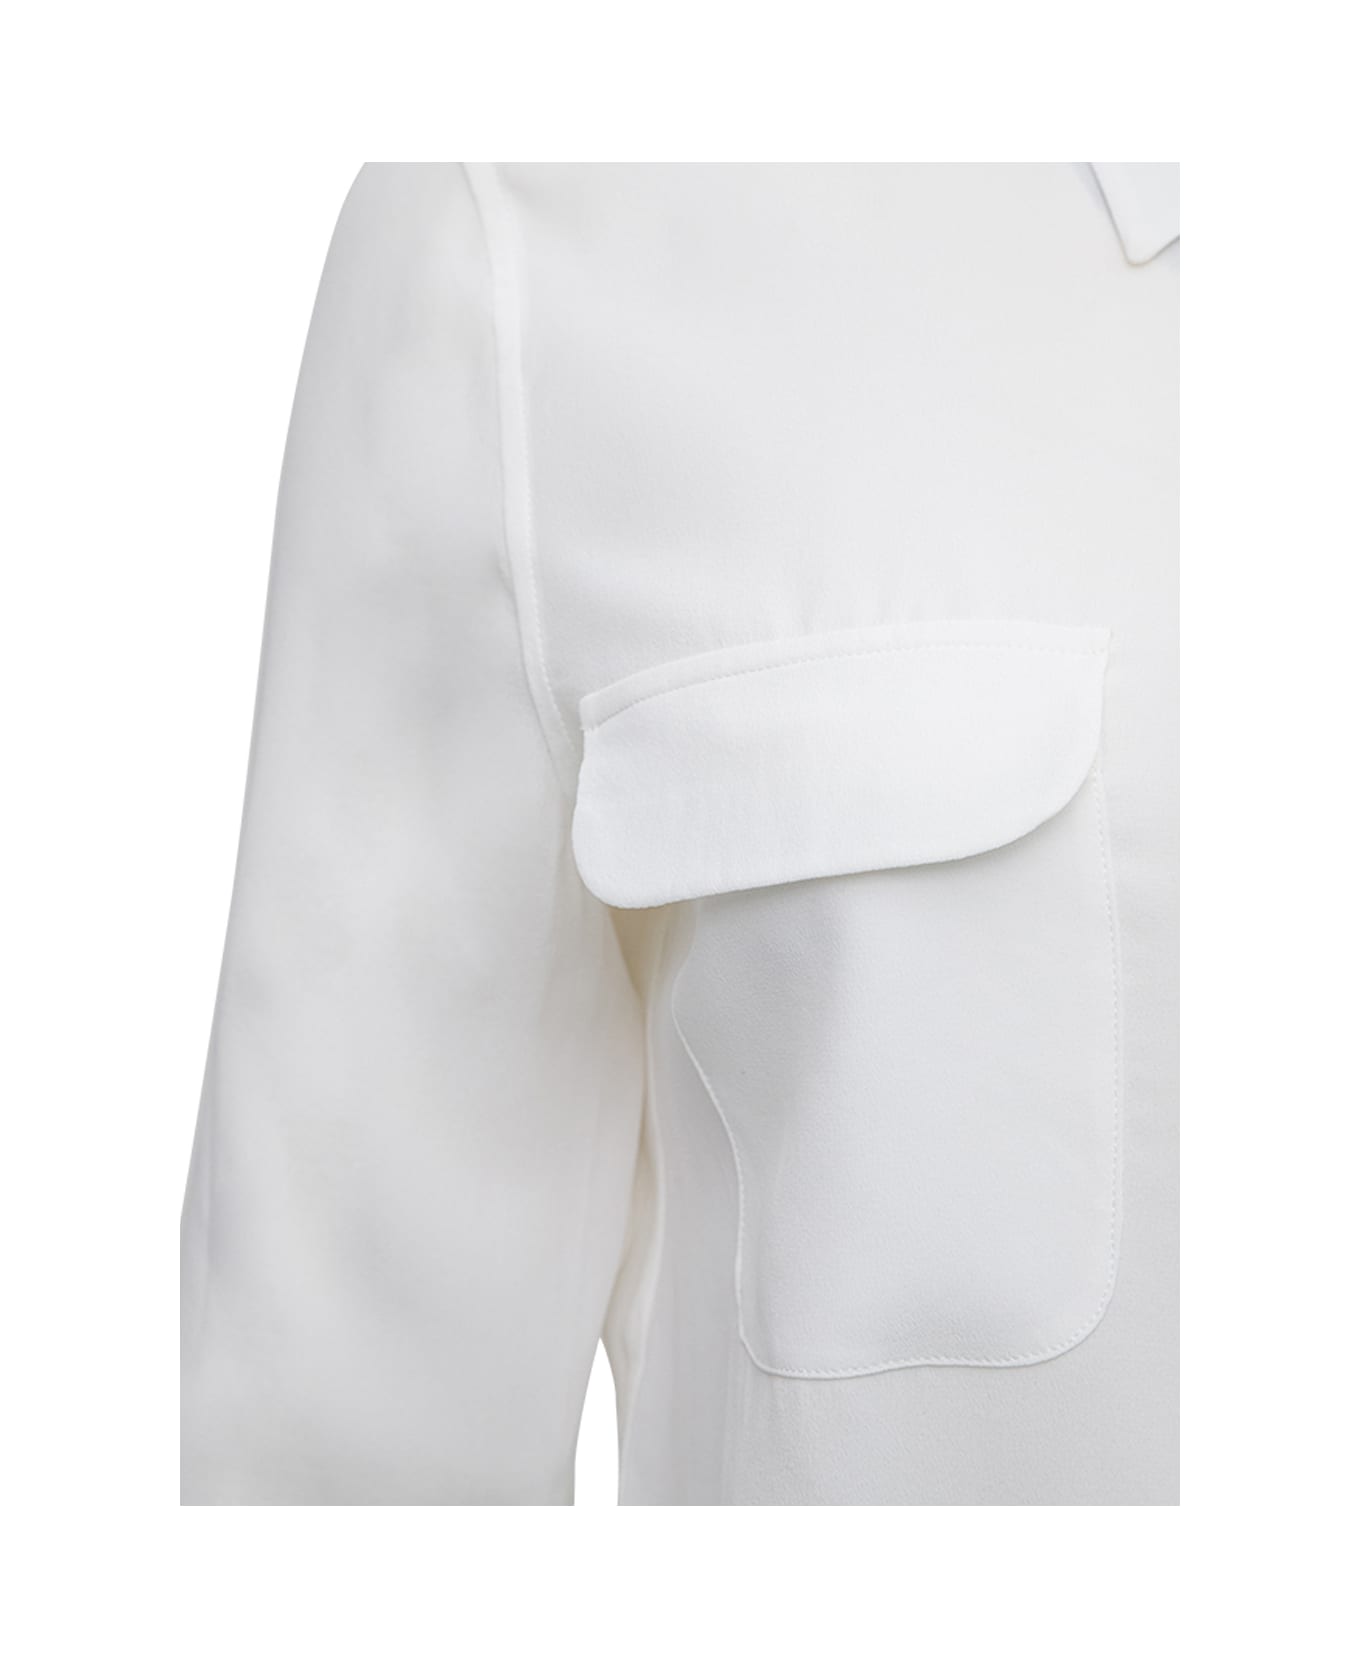 Equipment White Silk Shirt With Pockets